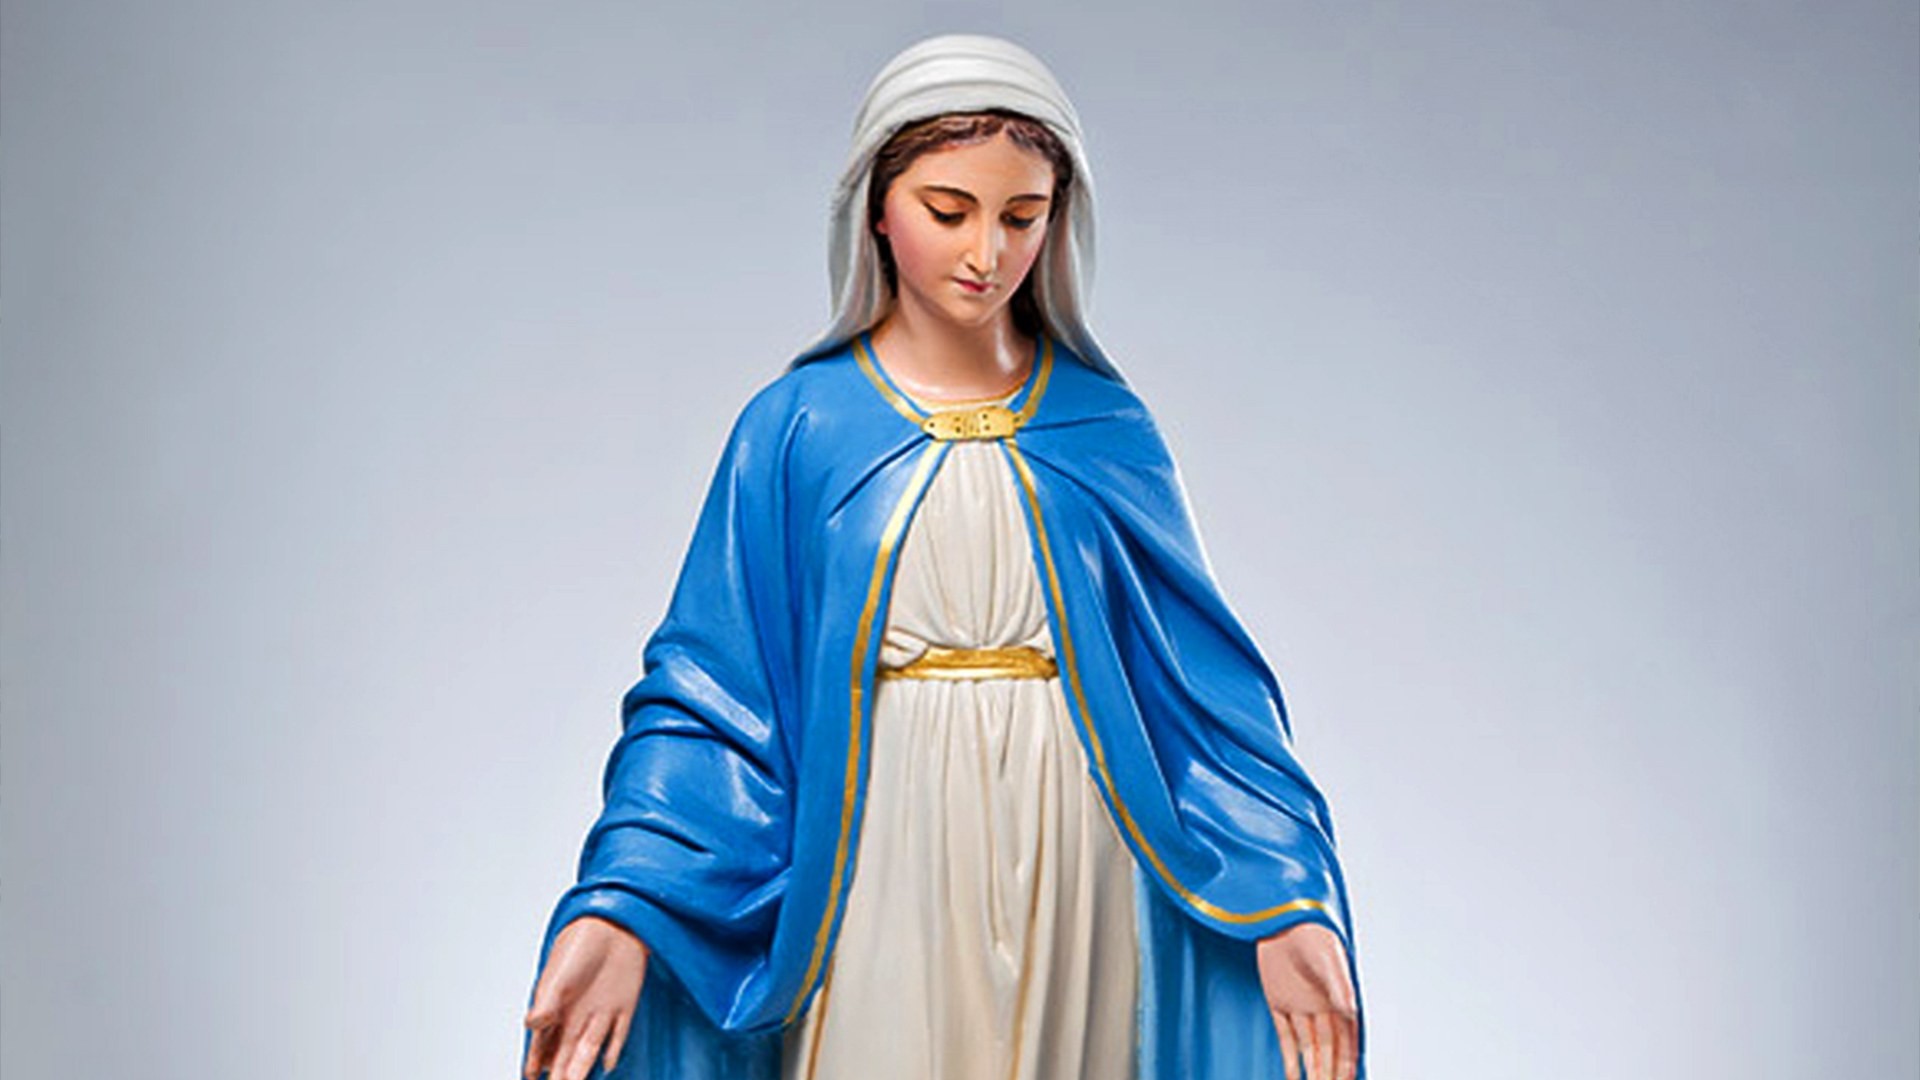 Дева Мария (Virgin Mary)